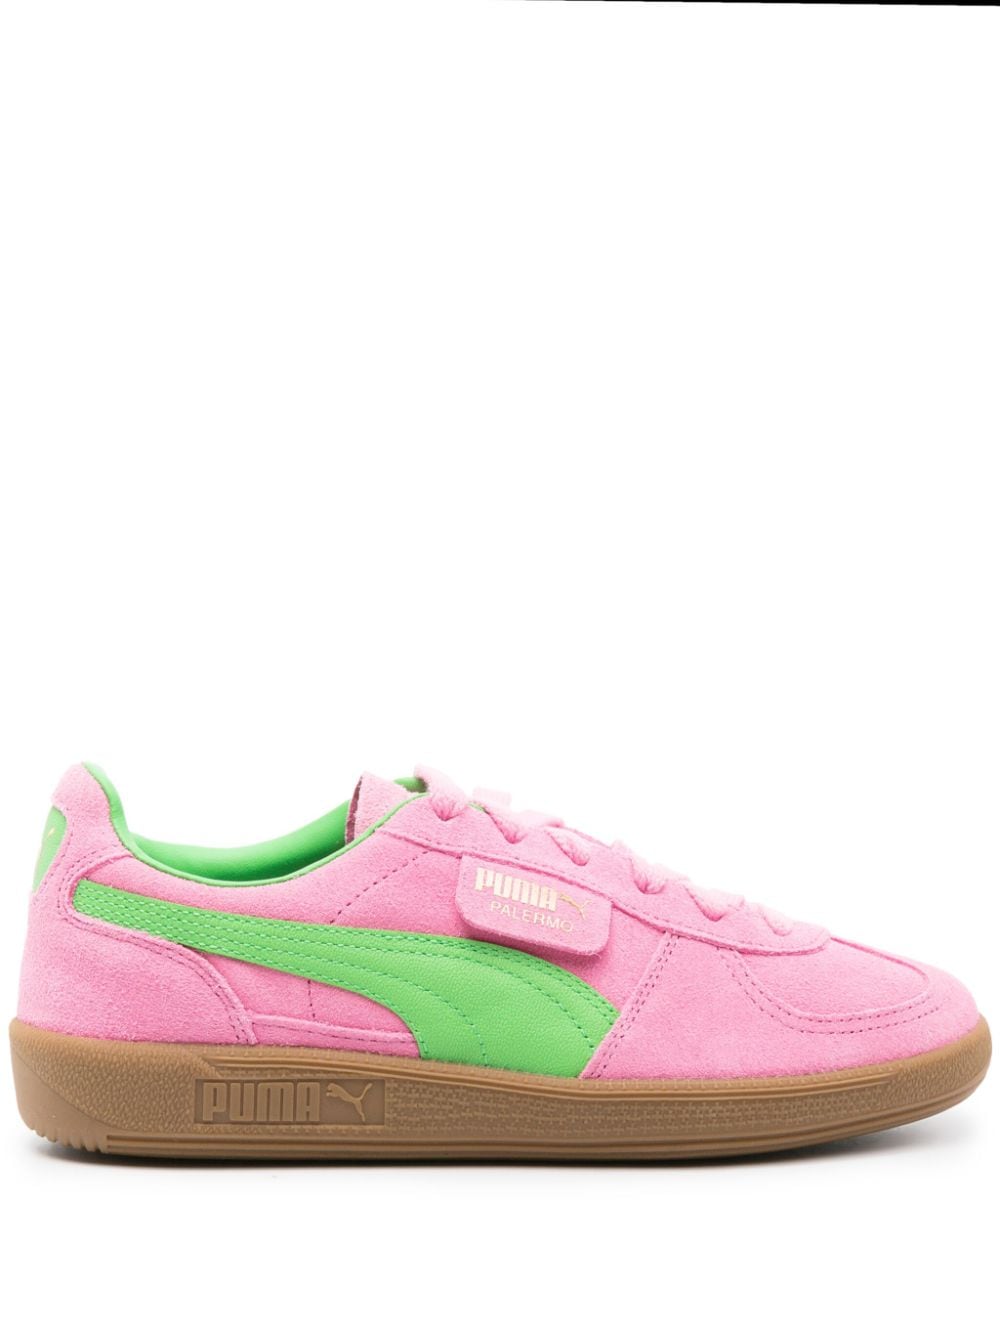 Puma PALERMO SPECIAL UNISEX - Zapatillas - pink delight/green/gum/rosa 